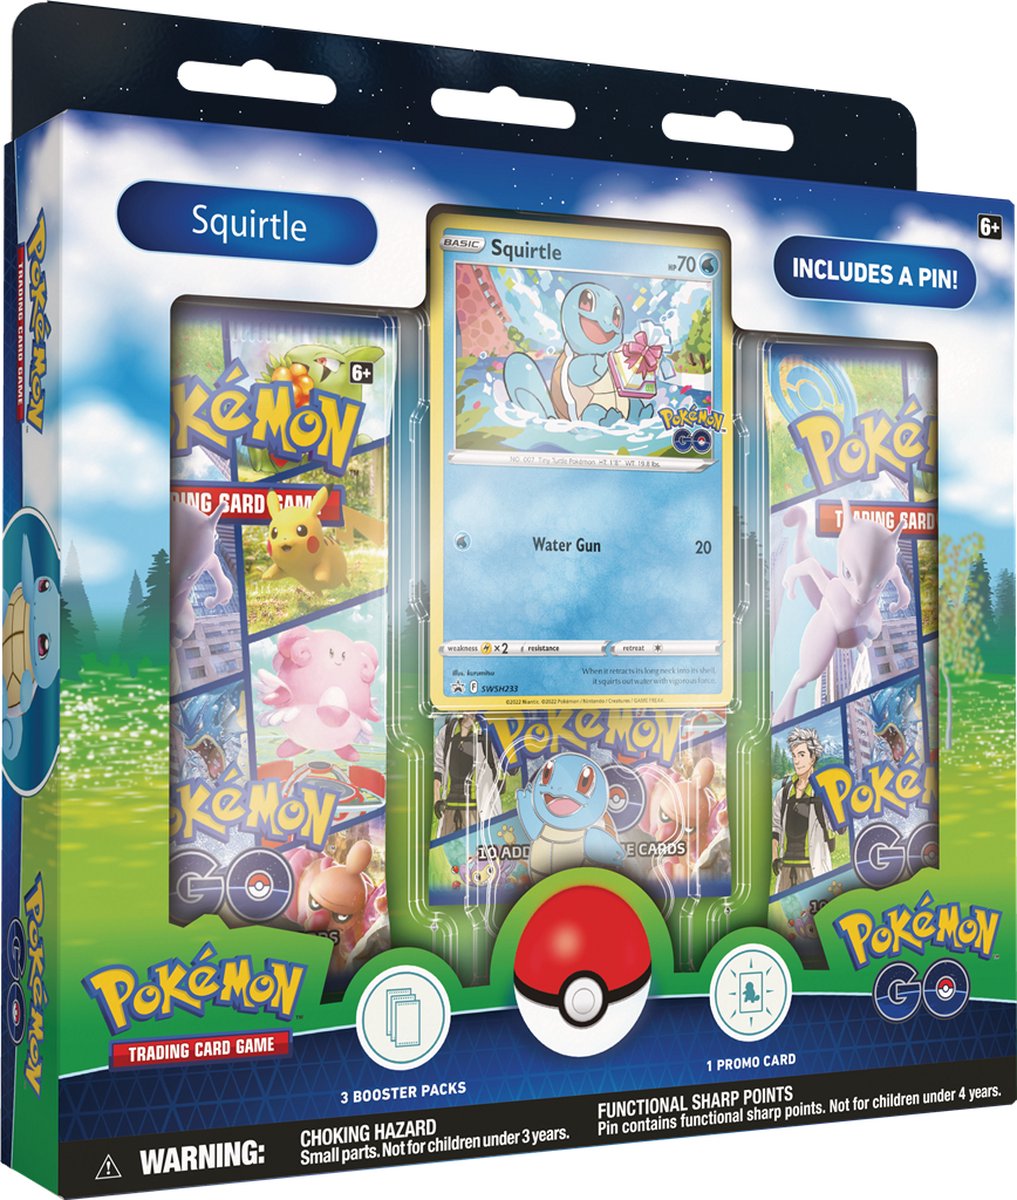 Pokémon GO Squirtle Pin Box